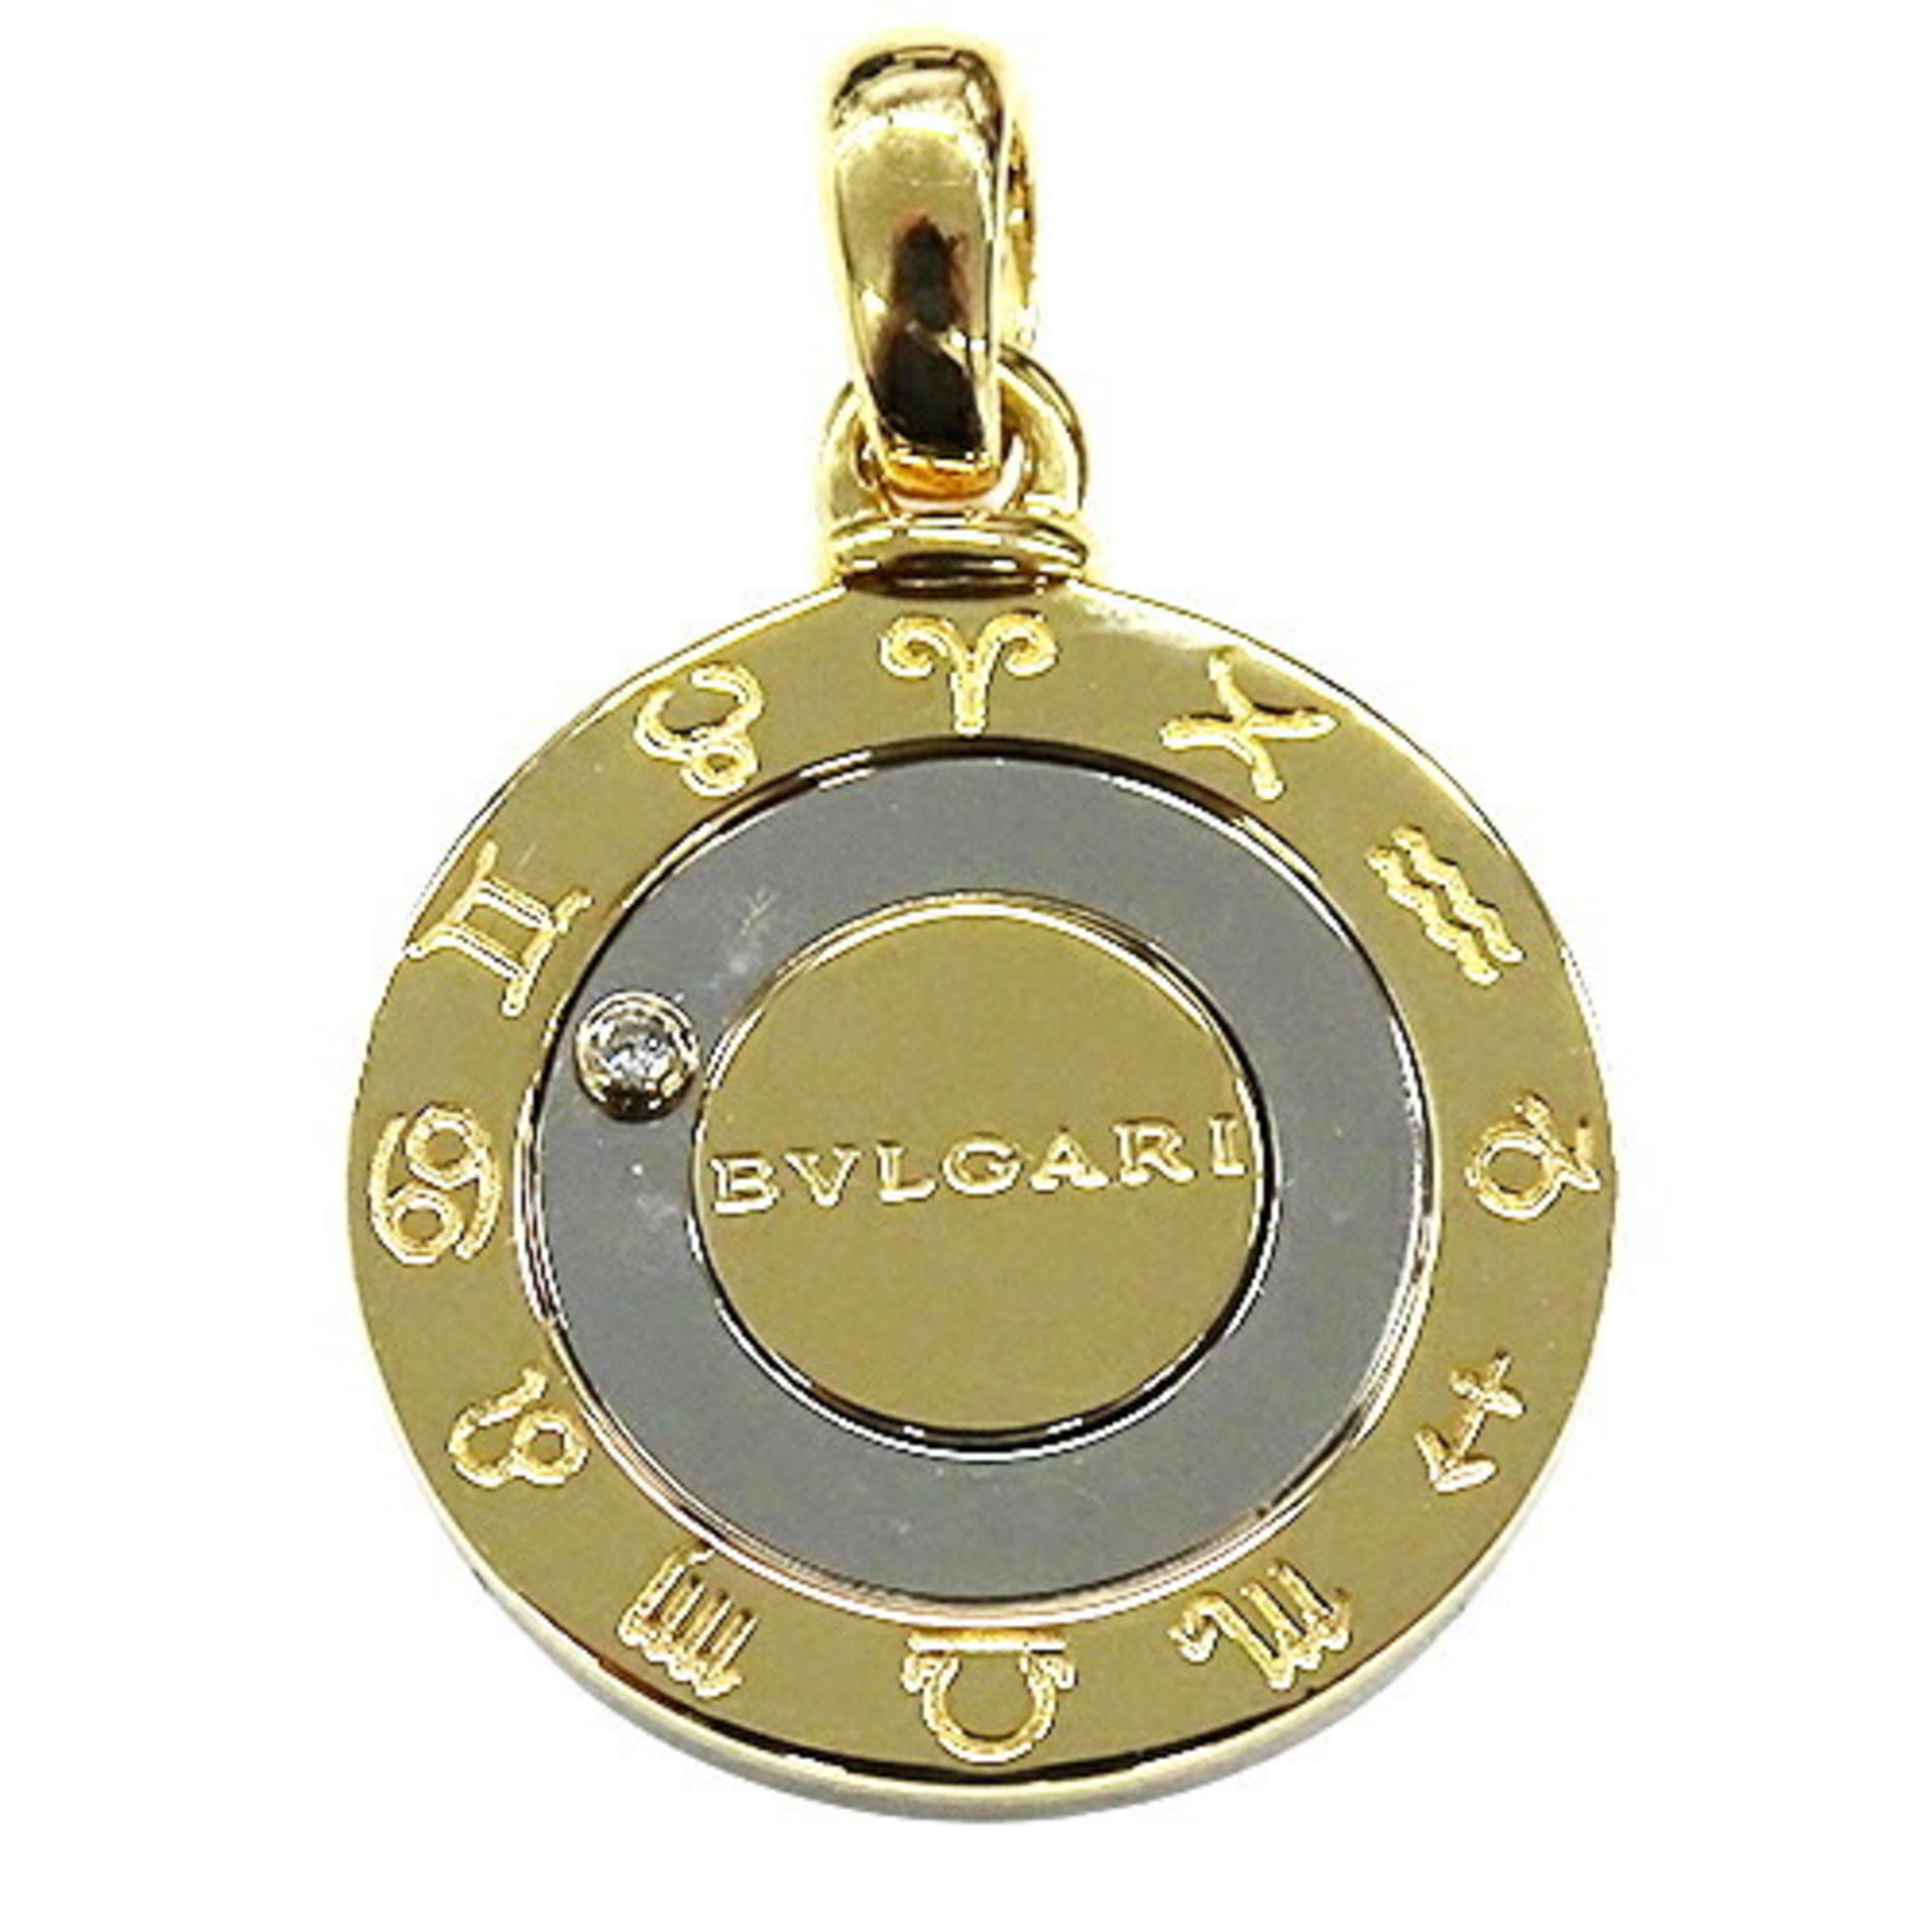 Bvlgari BVLGARI pendant top ladies men charm 750YG stainless steel horoscope yellow gold silver polished